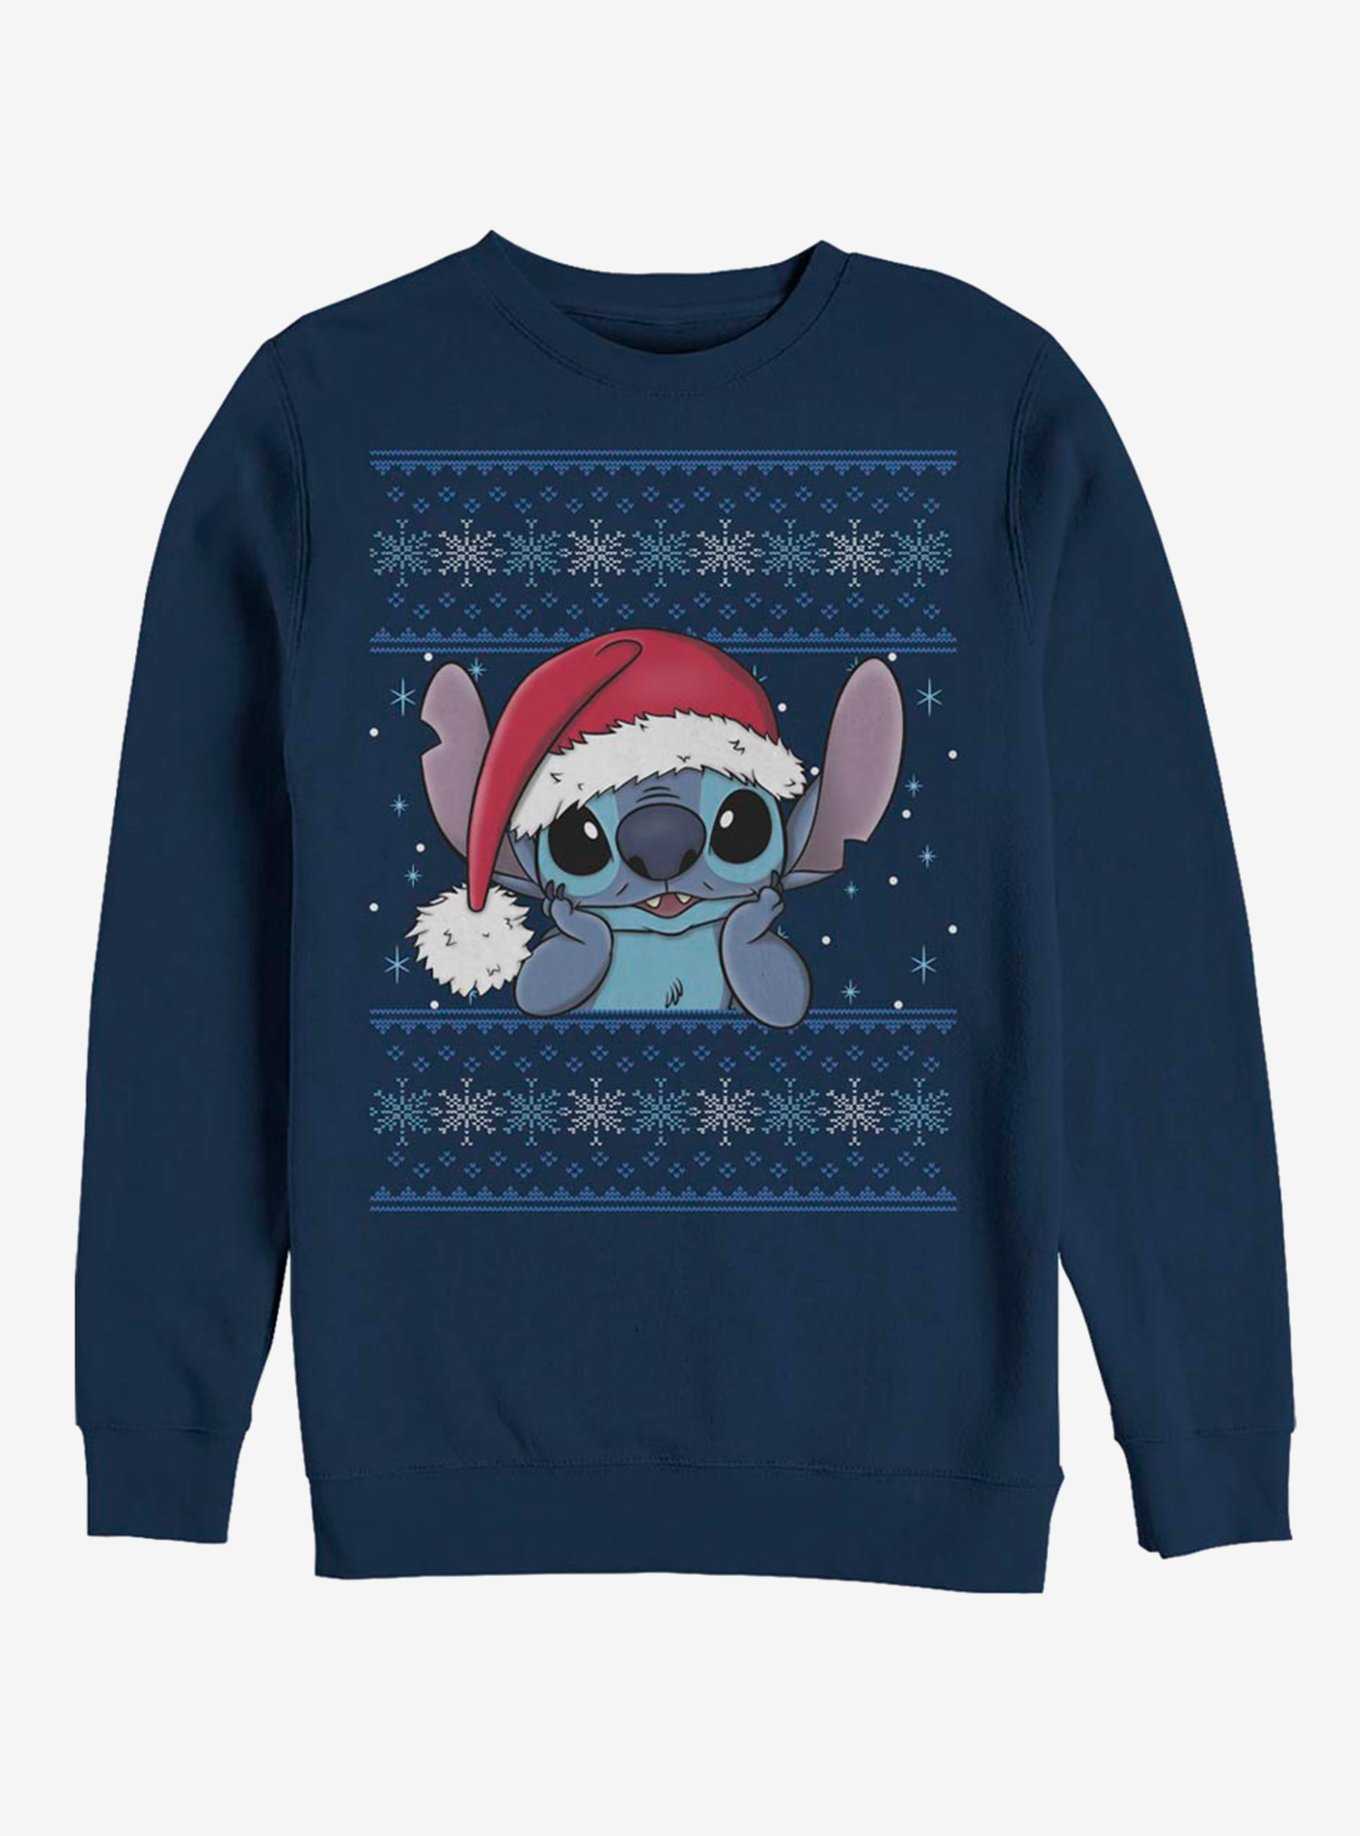 Disney Lilo & Stitch Holiday Stitch Wearing Santa Hat Crew Sweatshirt, , hi-res